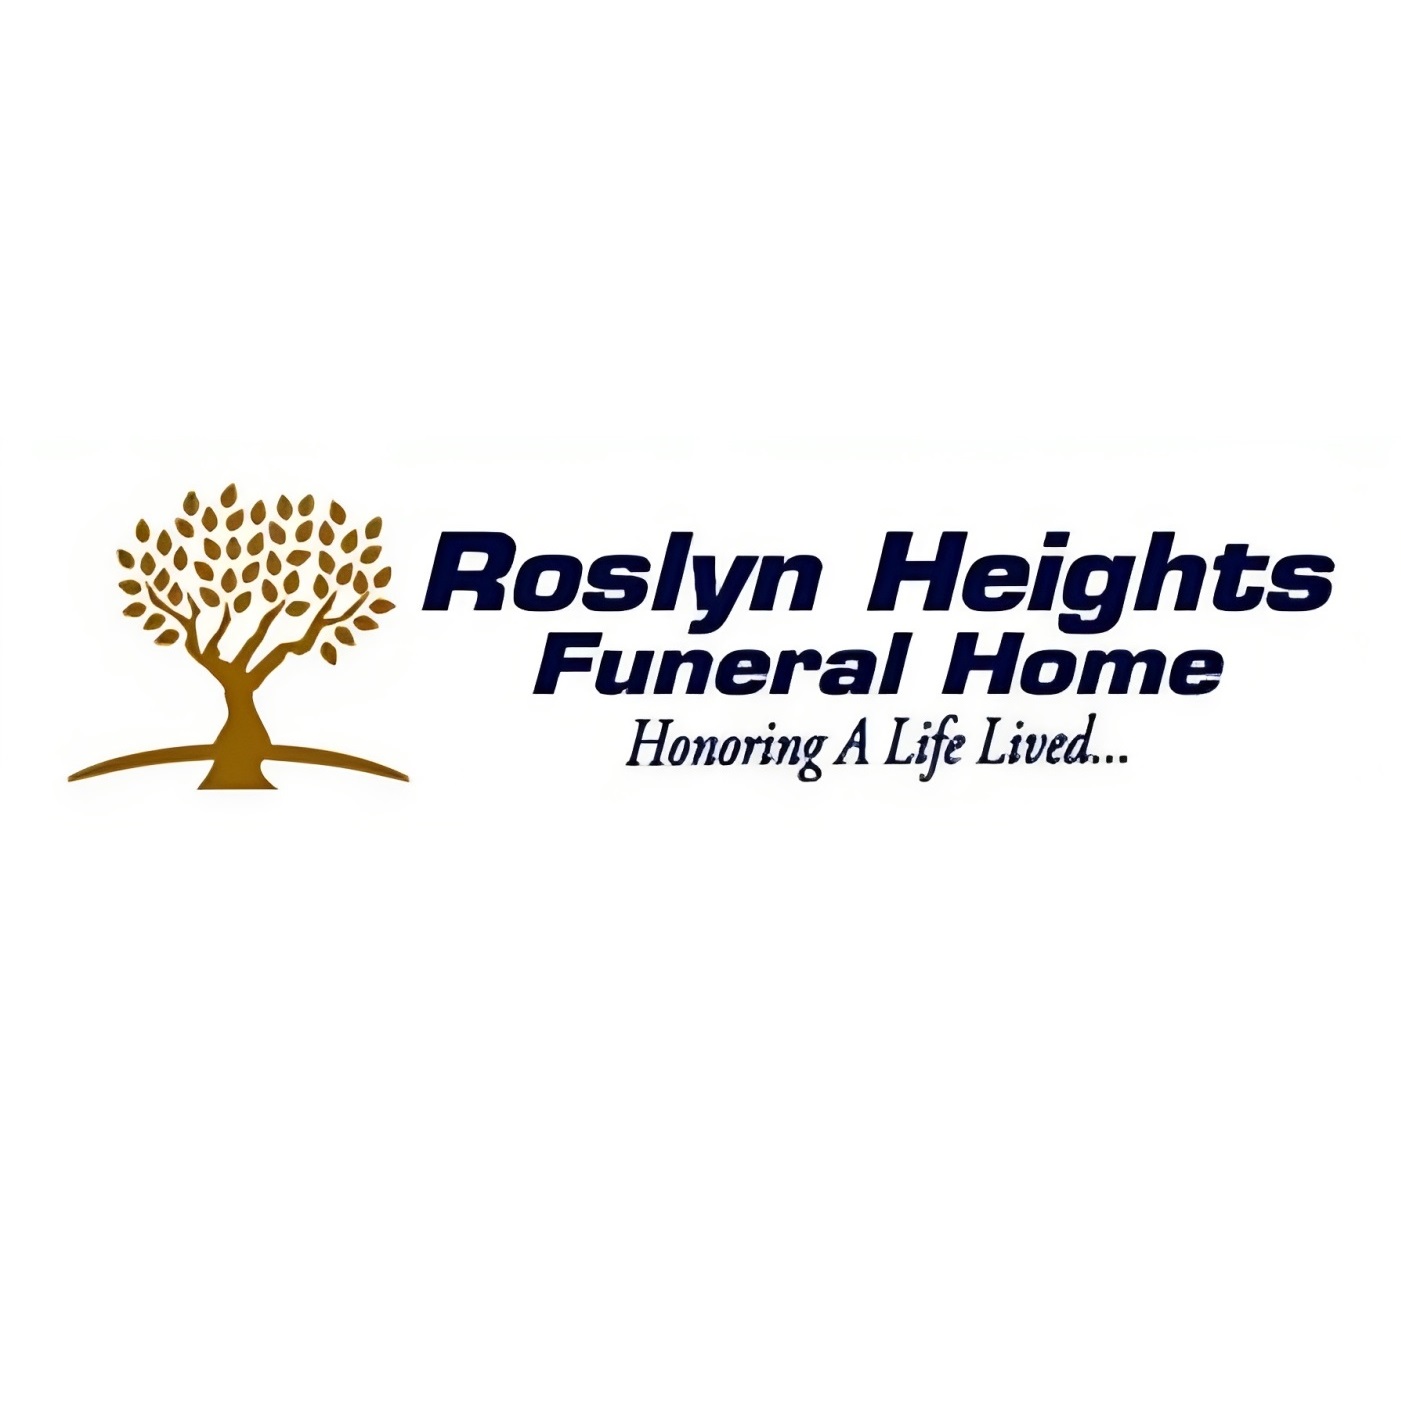 roslyn heights funeral home | funeral directors in roslyn heights